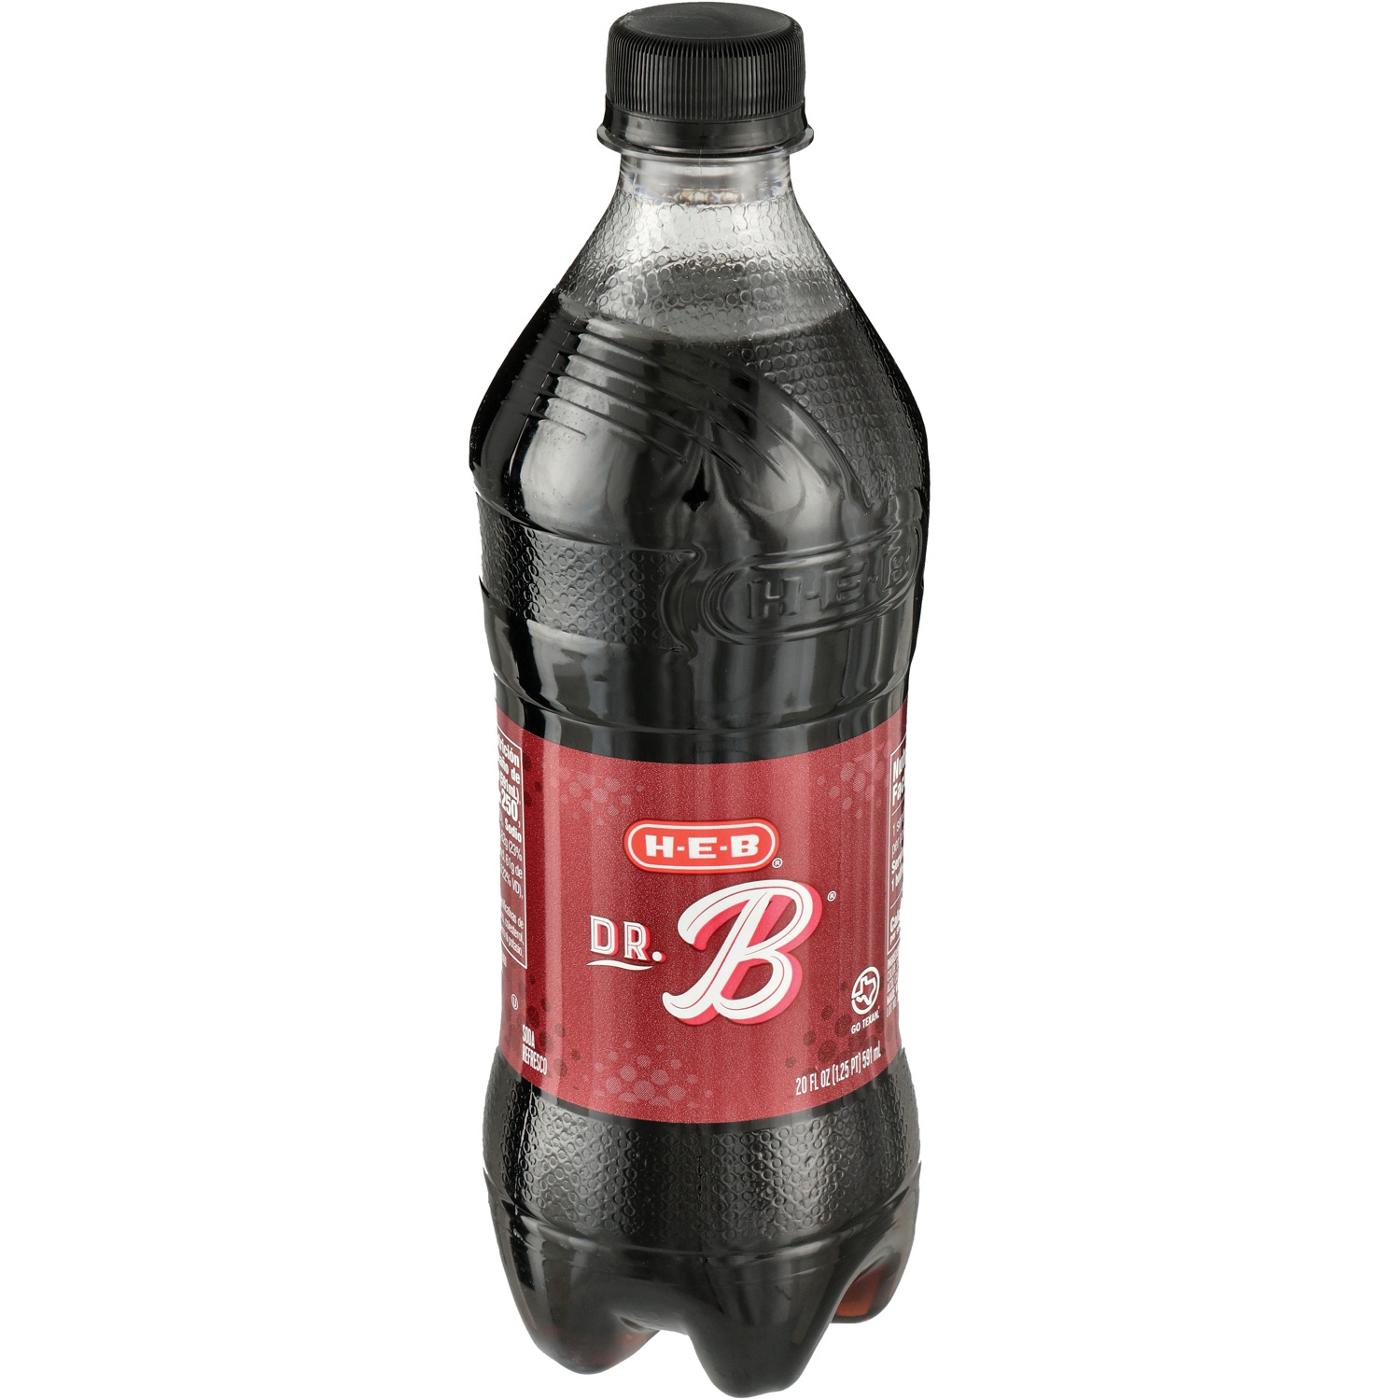 H-E-B Dr. B Soda; image 1 of 2